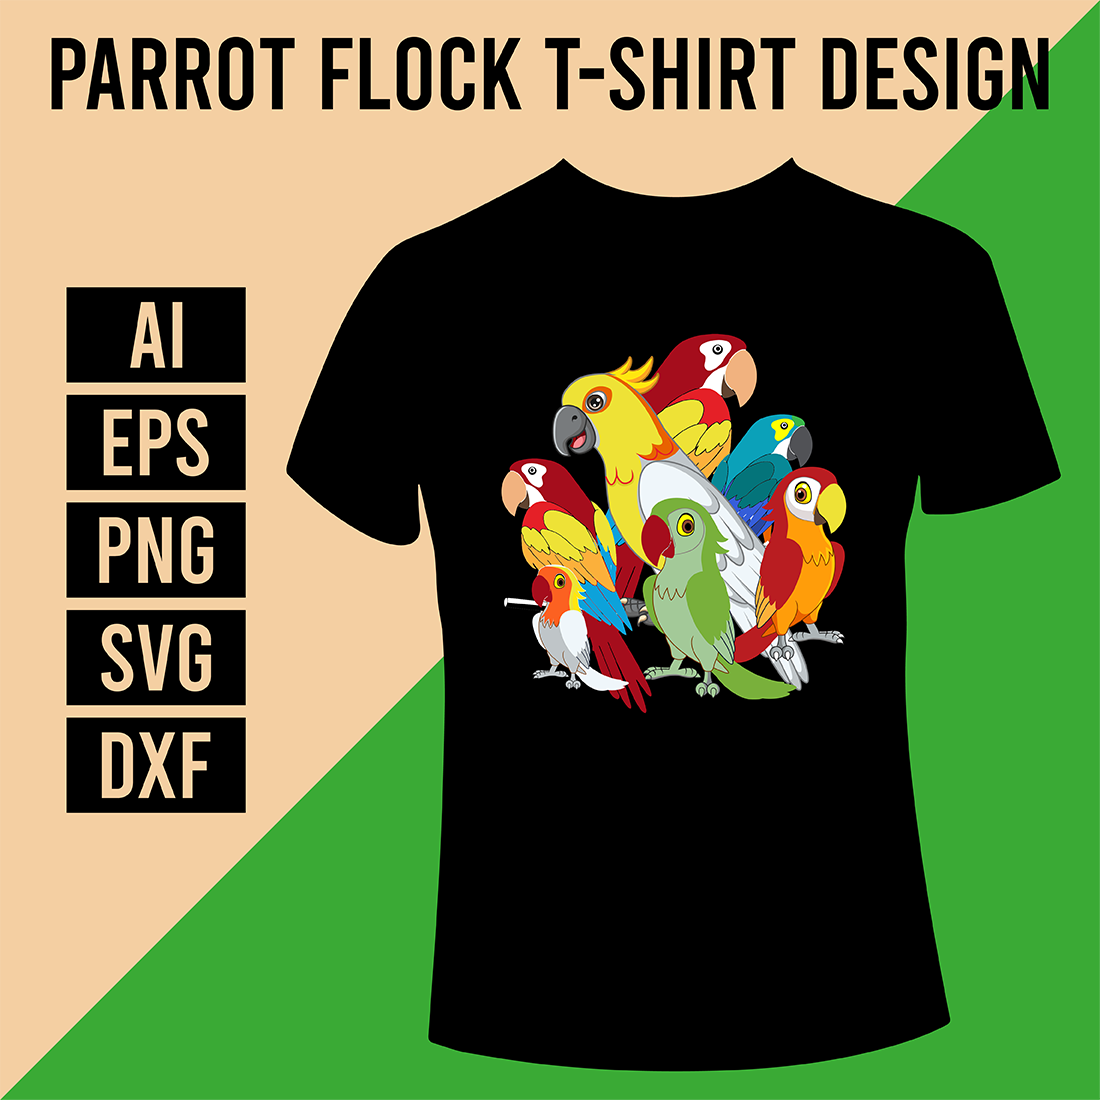 Parrot Flock T-Shirt Design cover image.